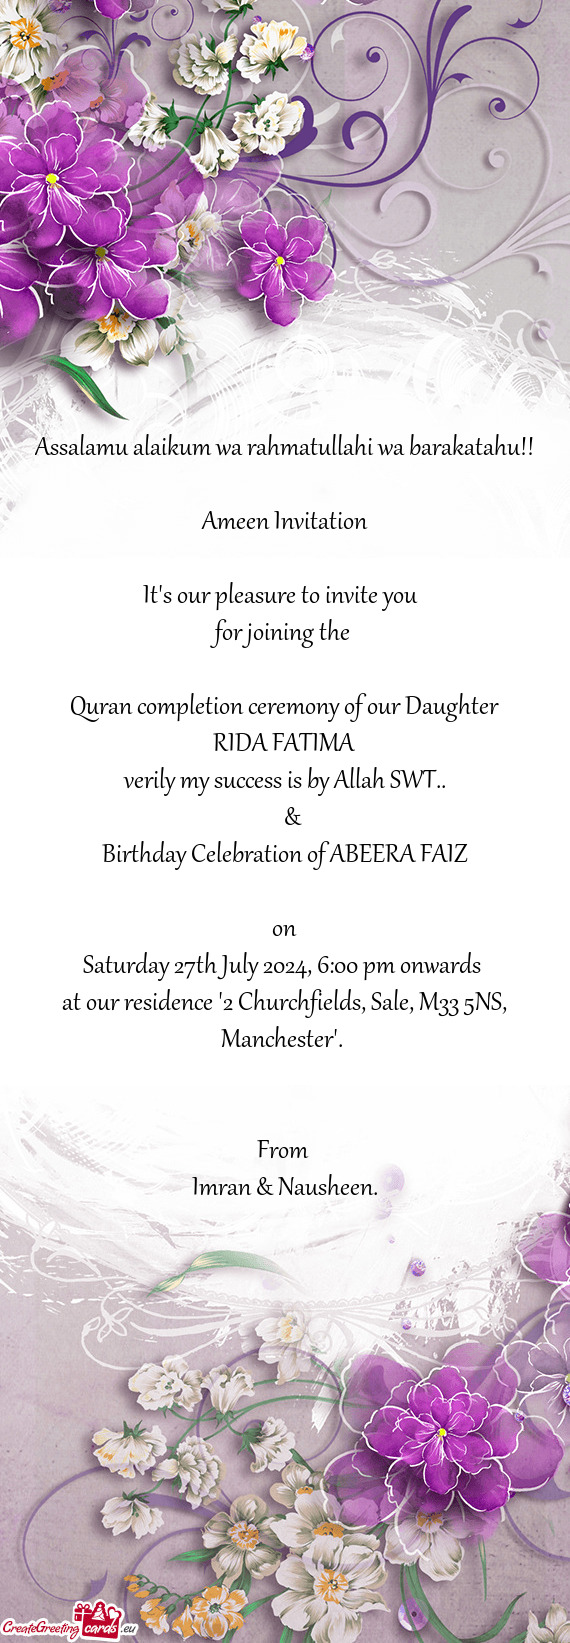 Birthday Celebration of ABEERA FAIZ